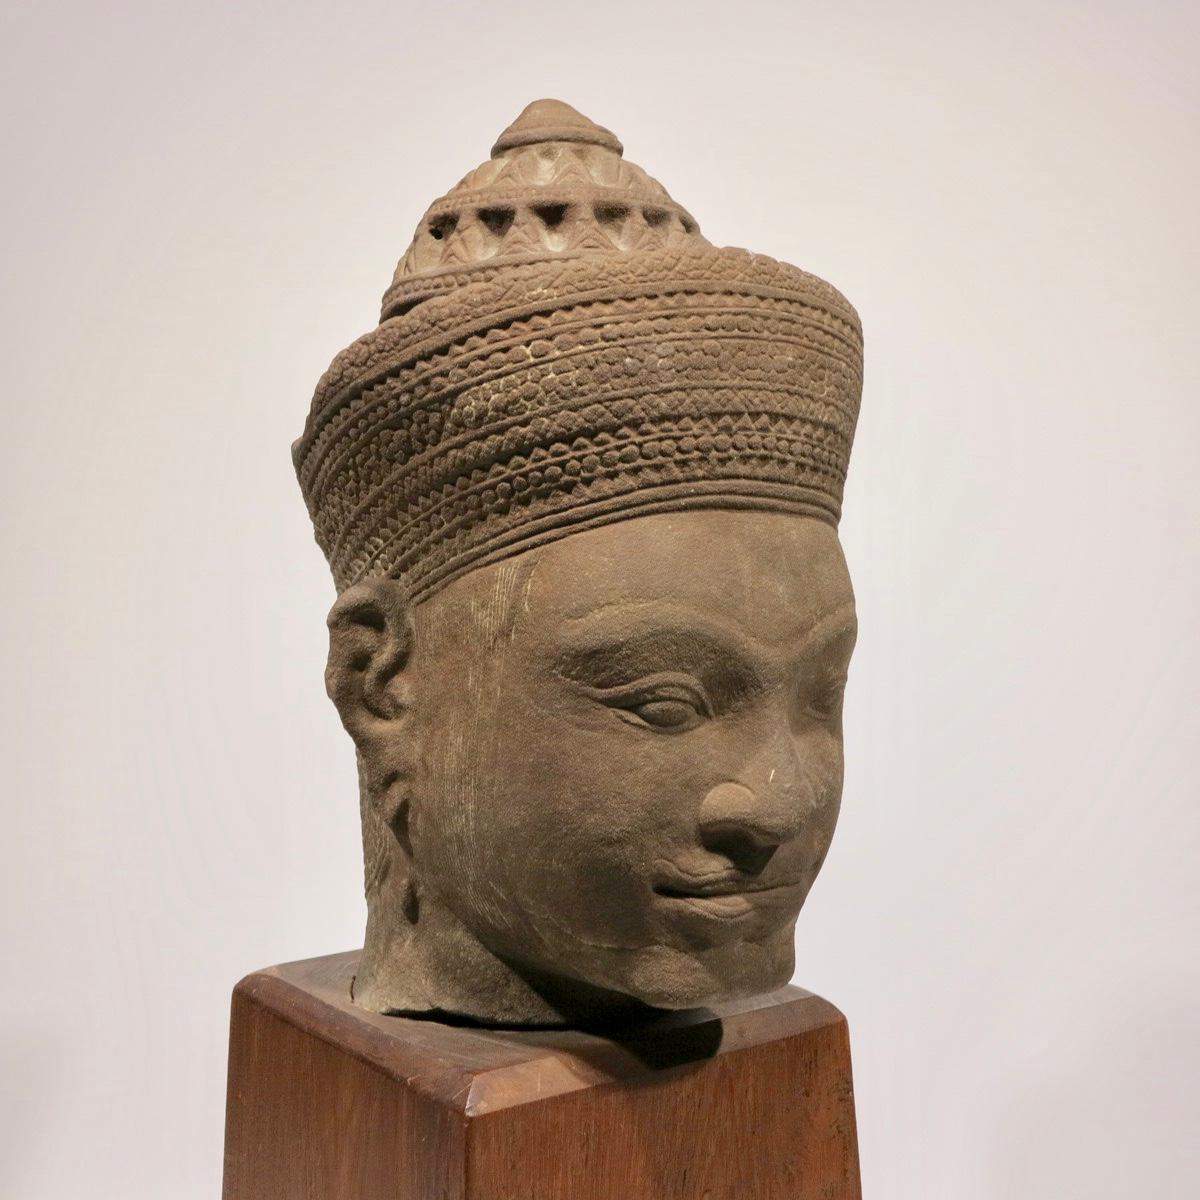 Head of Vishnu, Khmer, Cambodian bust sculpture 3